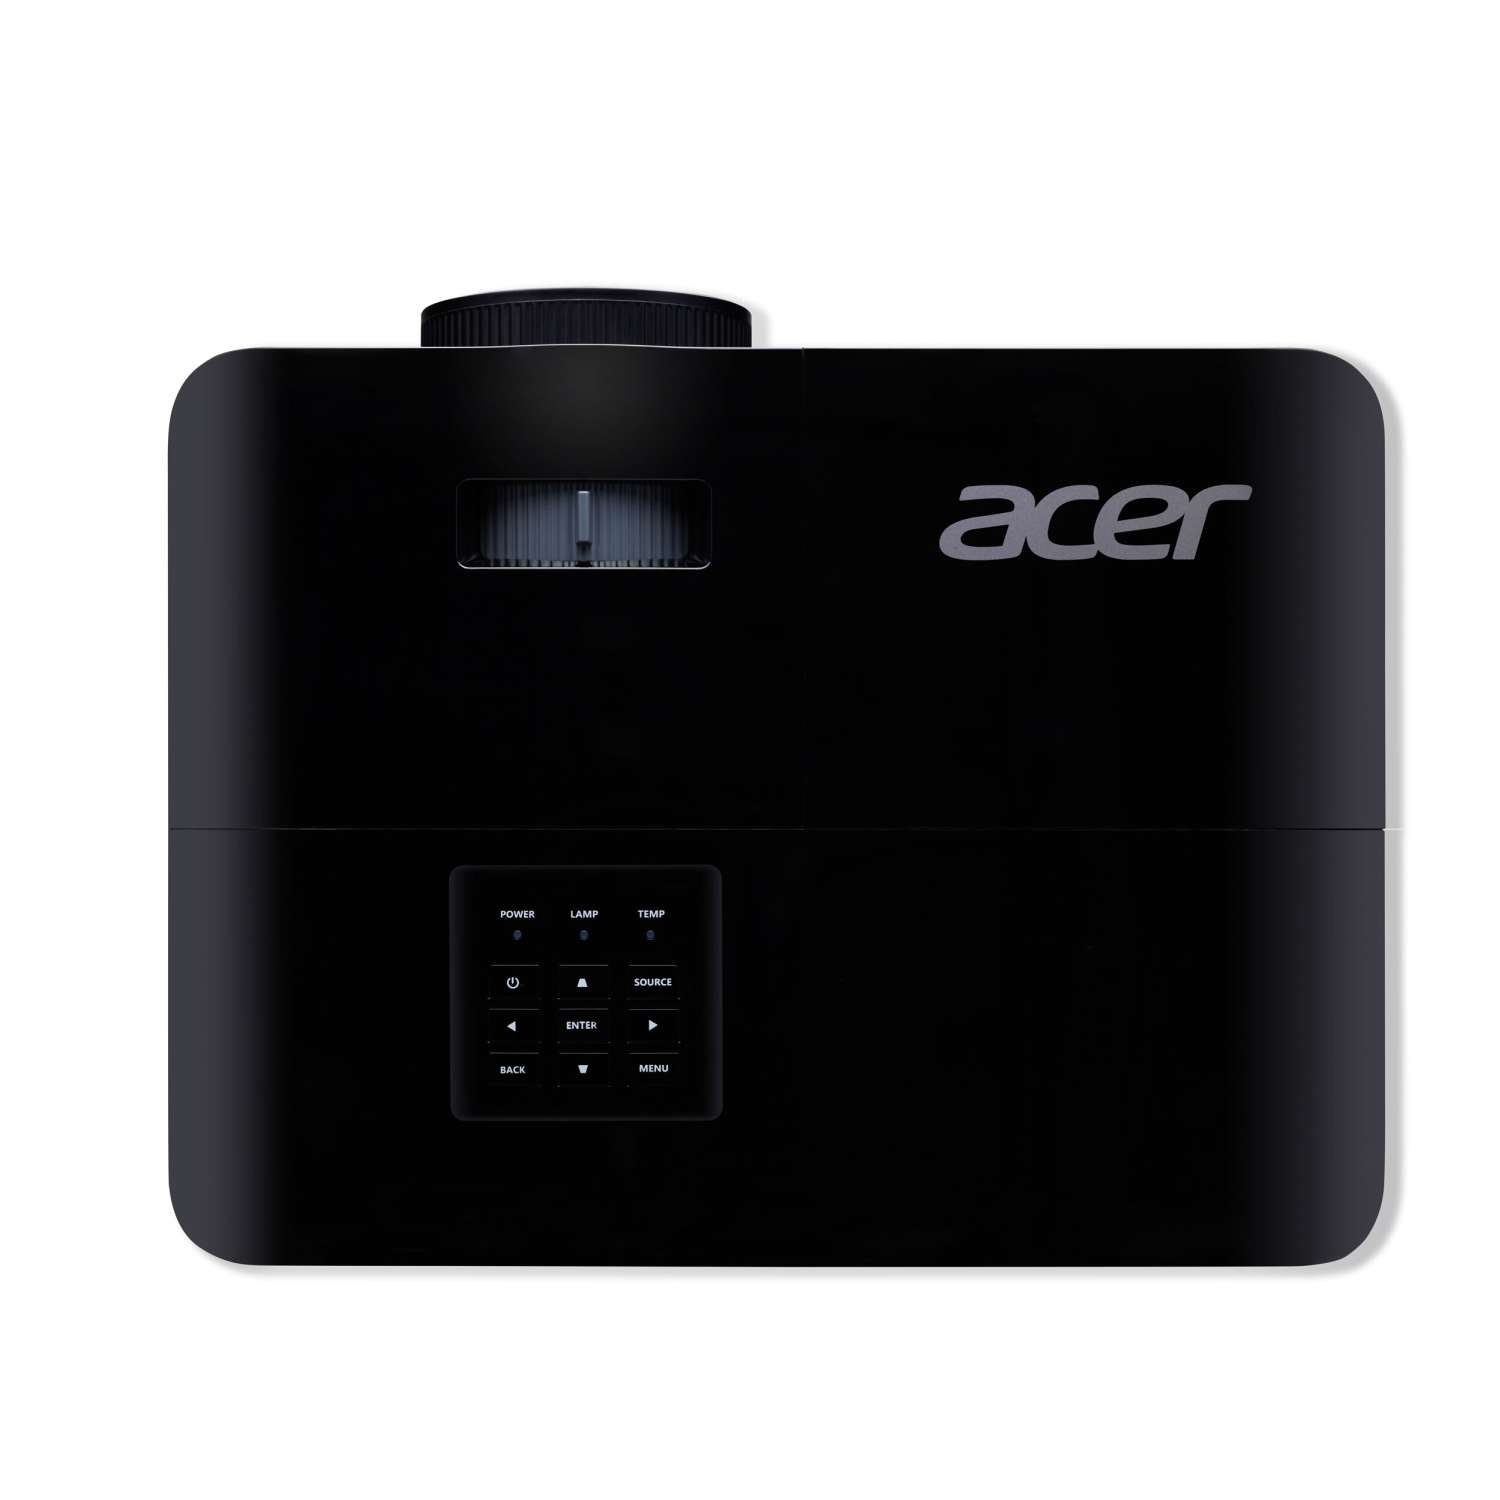 3D-Beamer Acer x lm, px) 1280 800 X1326AWH 20000:1, (4000